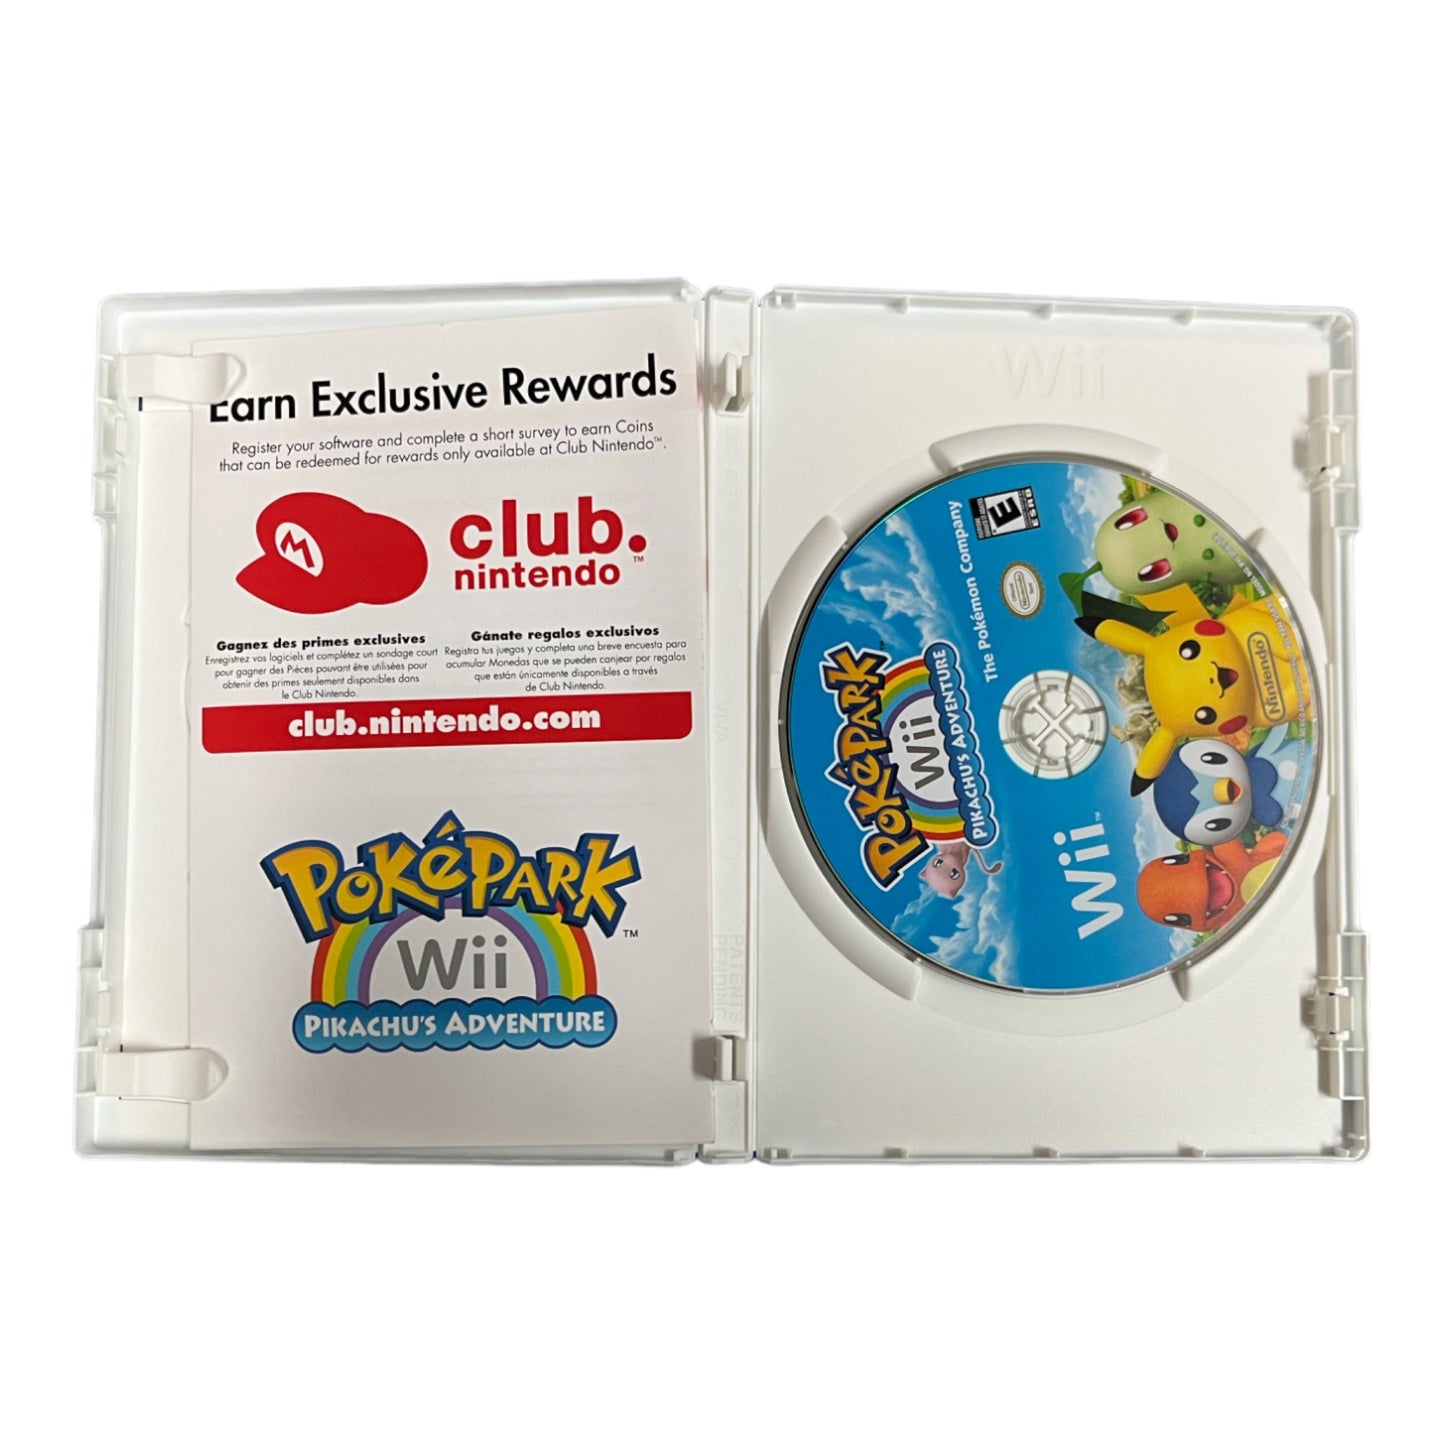 PokePark Wii: Pikachu's Adventure (Wii)